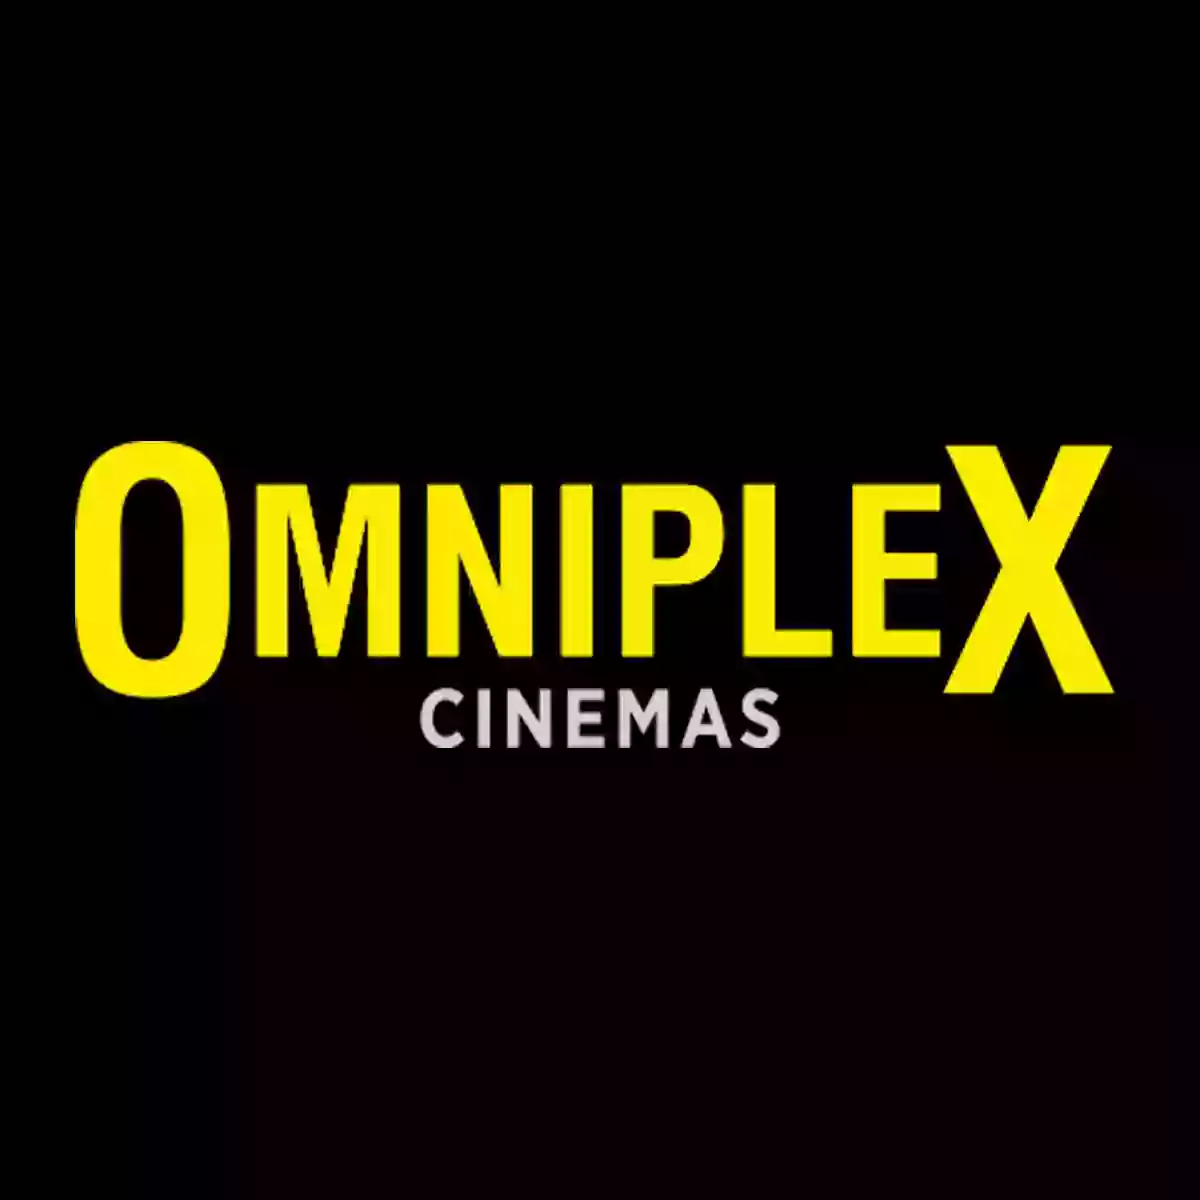 Omniplex Cinema Sligo